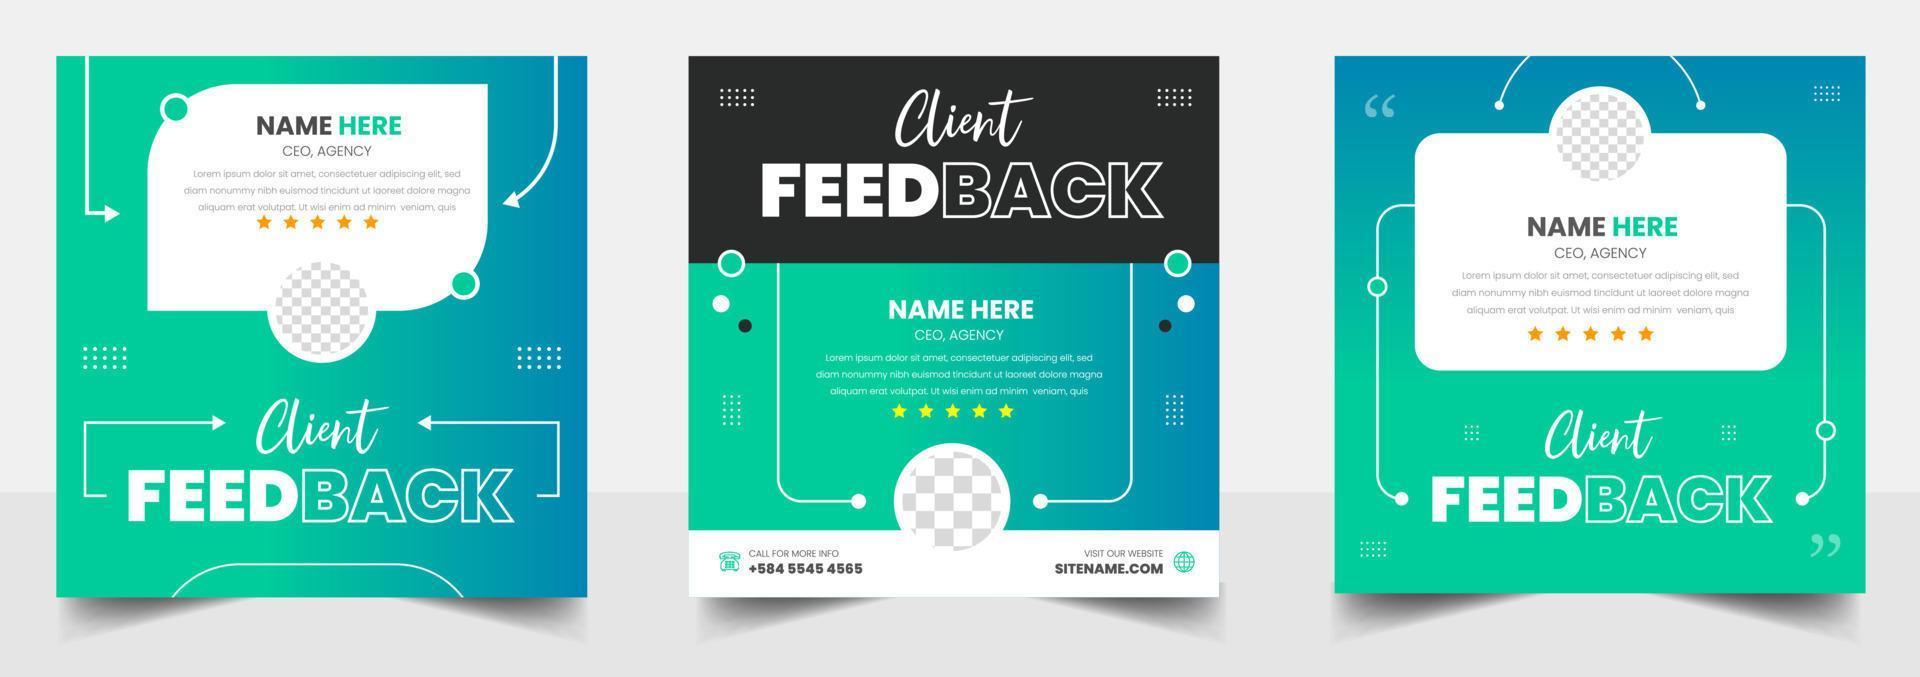 Customer feedback testimonial social media post web banner template. client testimonials social media post banner design template with green color vector